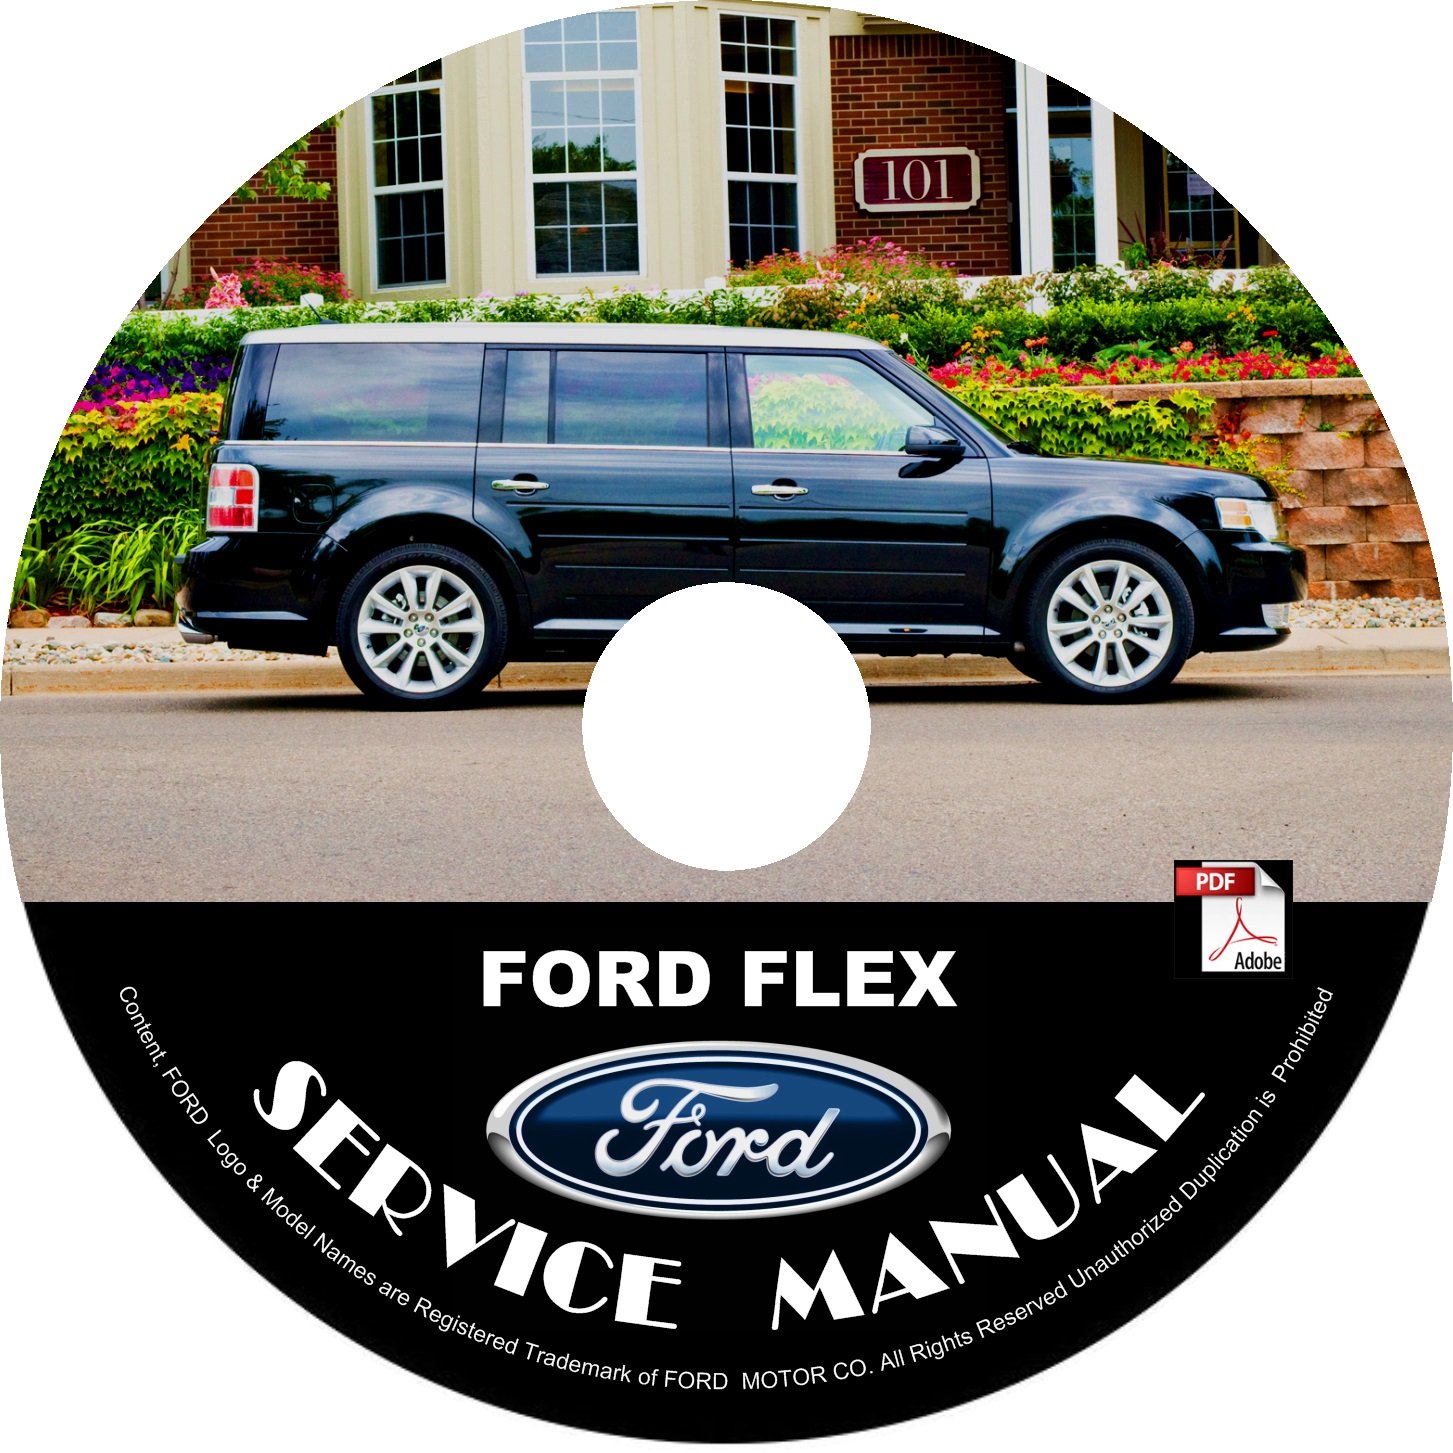 2009 Ford Flex Factory Repair Service Shop Manual on CD Fix Repair Rebuilt Workshop Guide